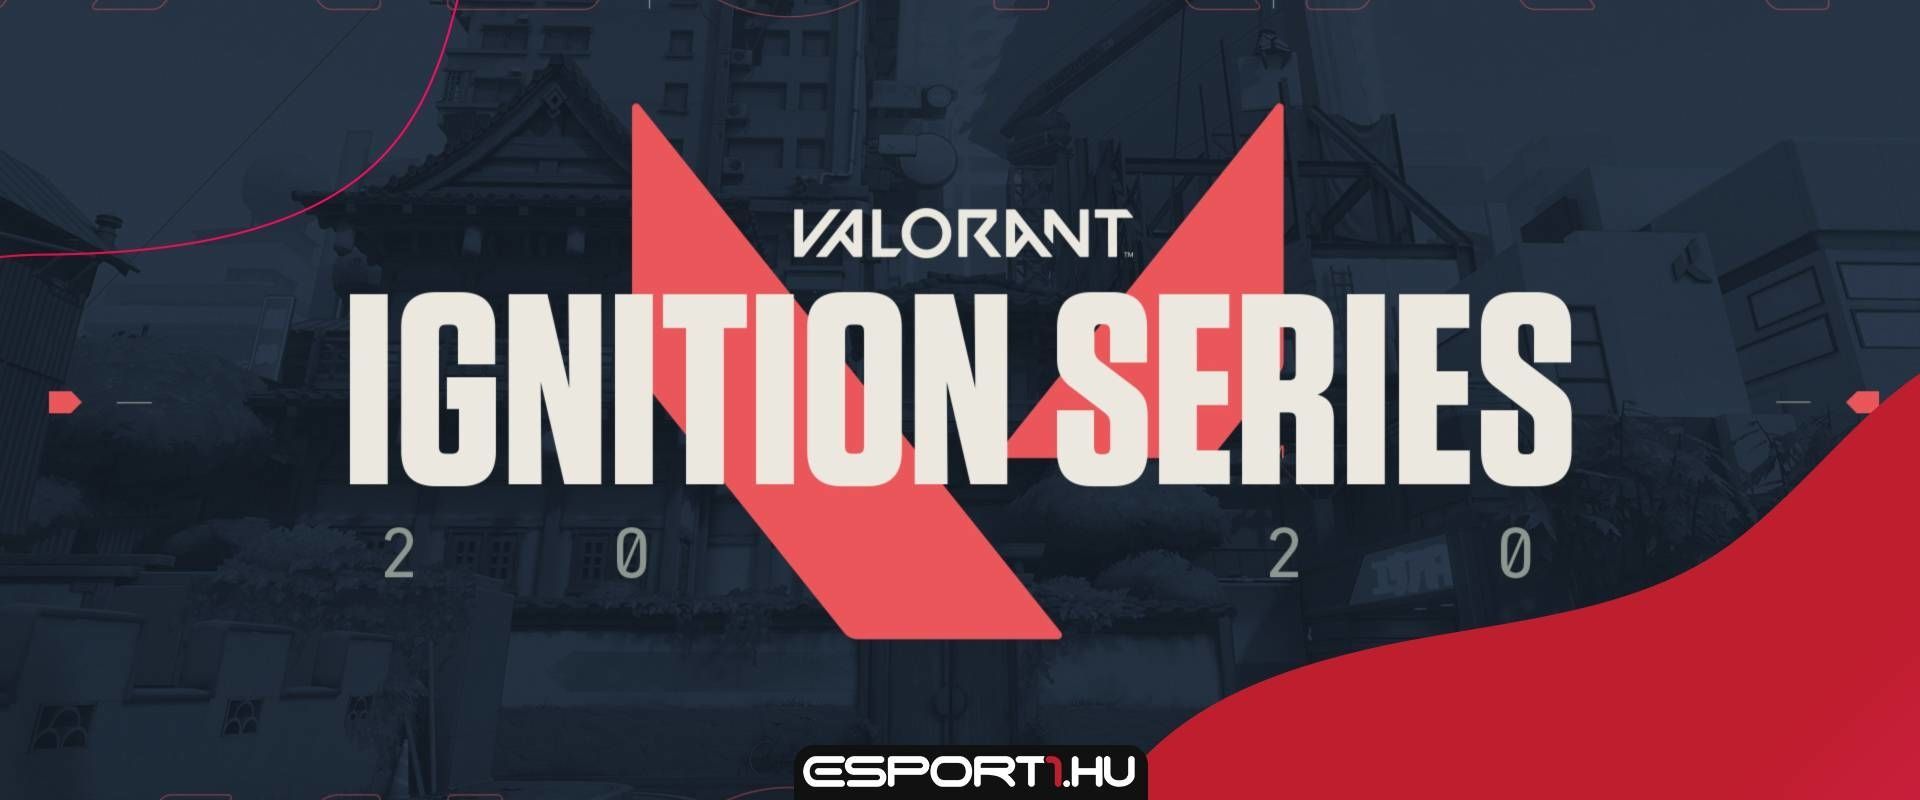 Épül a VALORANT e-sport, a Riot Games bejelentette az Ignition Seriest